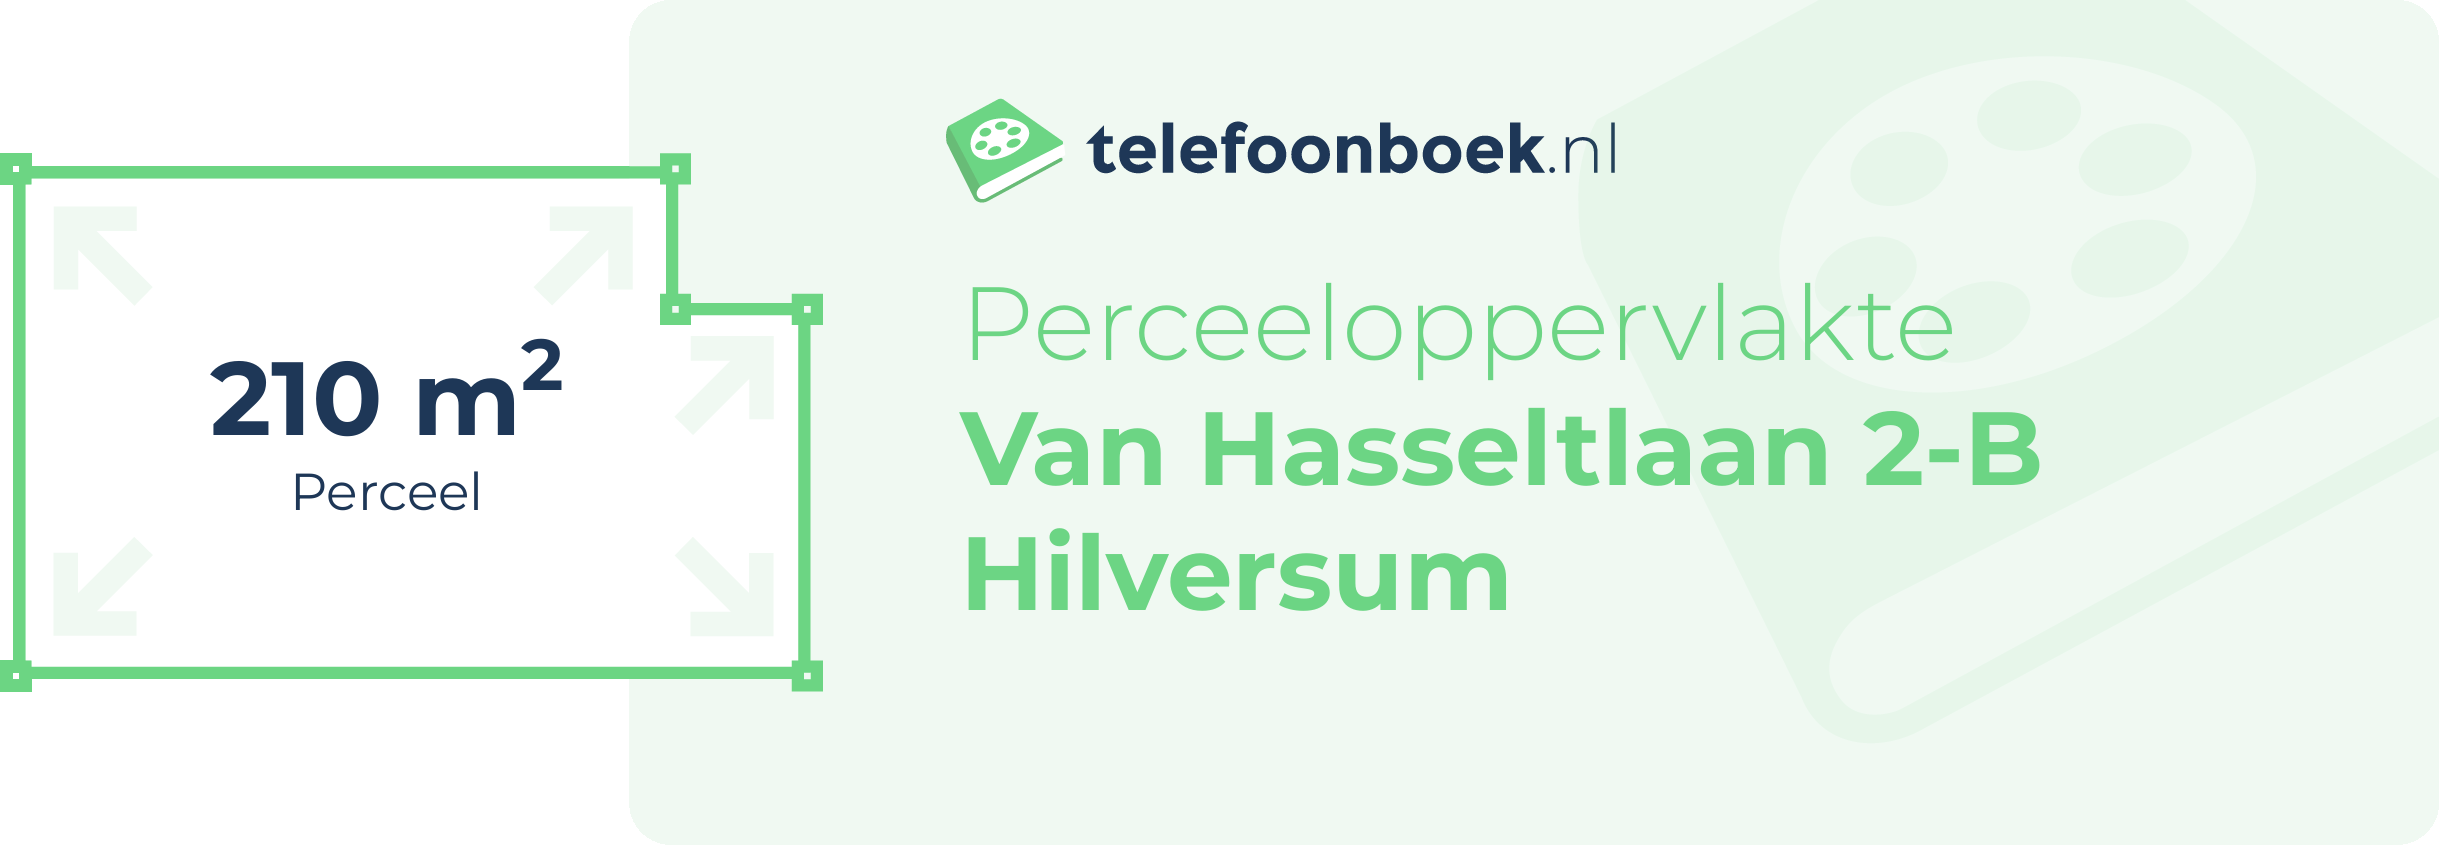 Perceeloppervlakte Van Hasseltlaan 2-B Hilversum